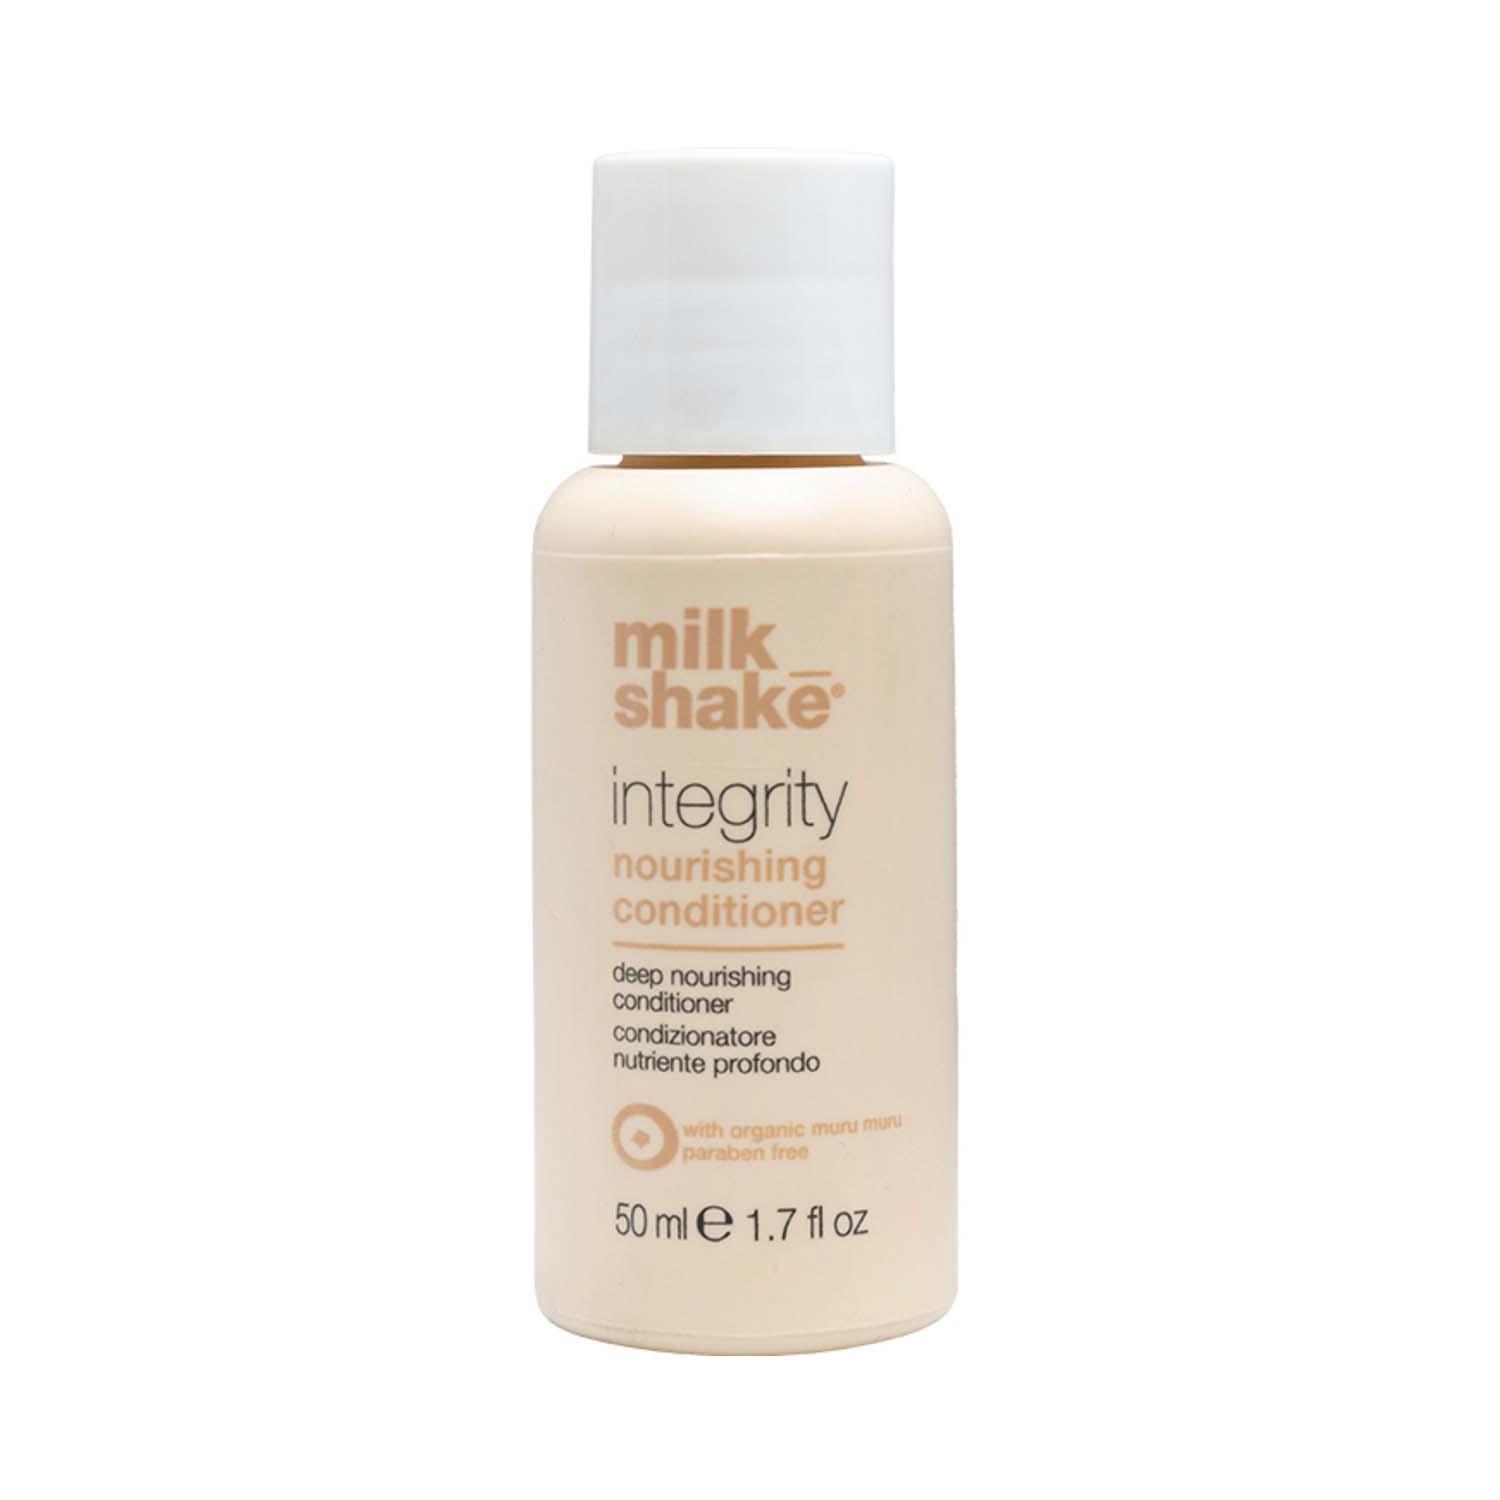 milk shake integrity conditioner (50ml)